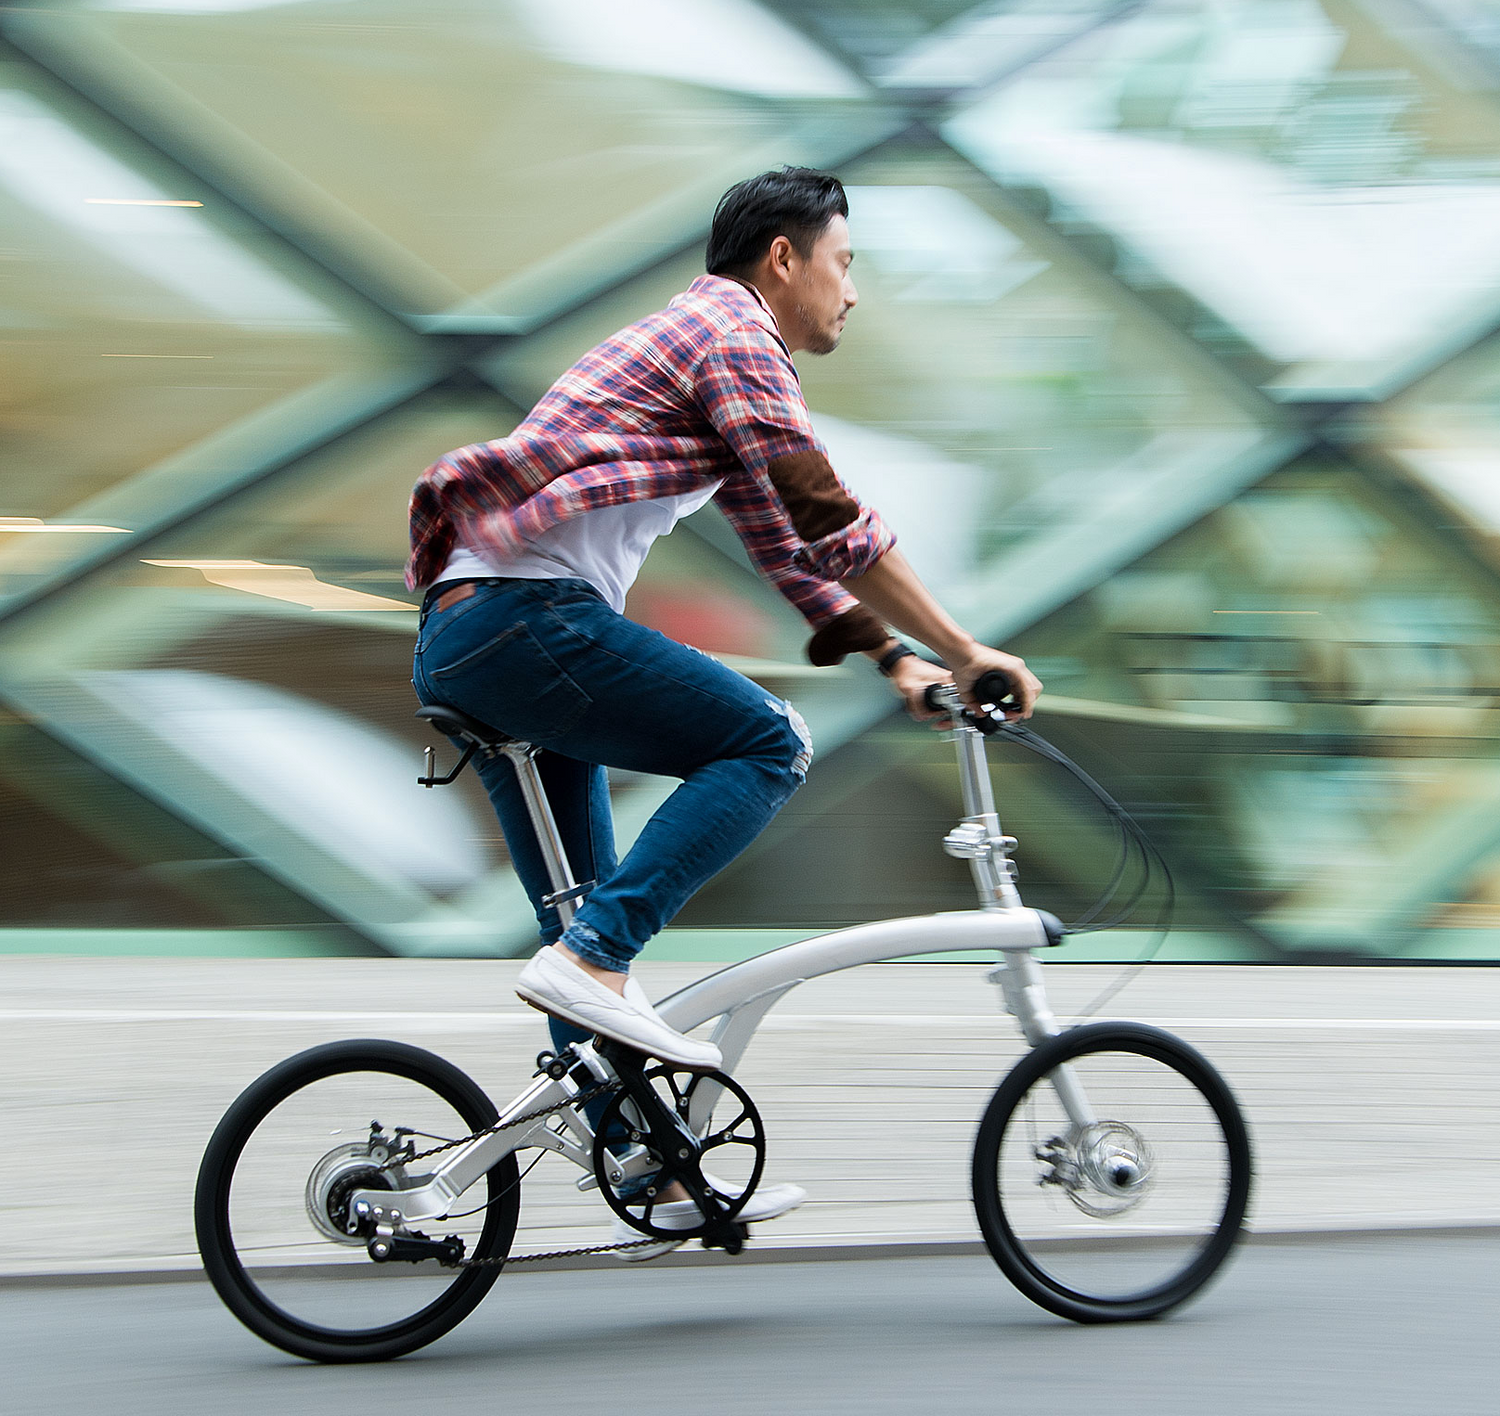 A man riding the white Iruka C bike in the city.